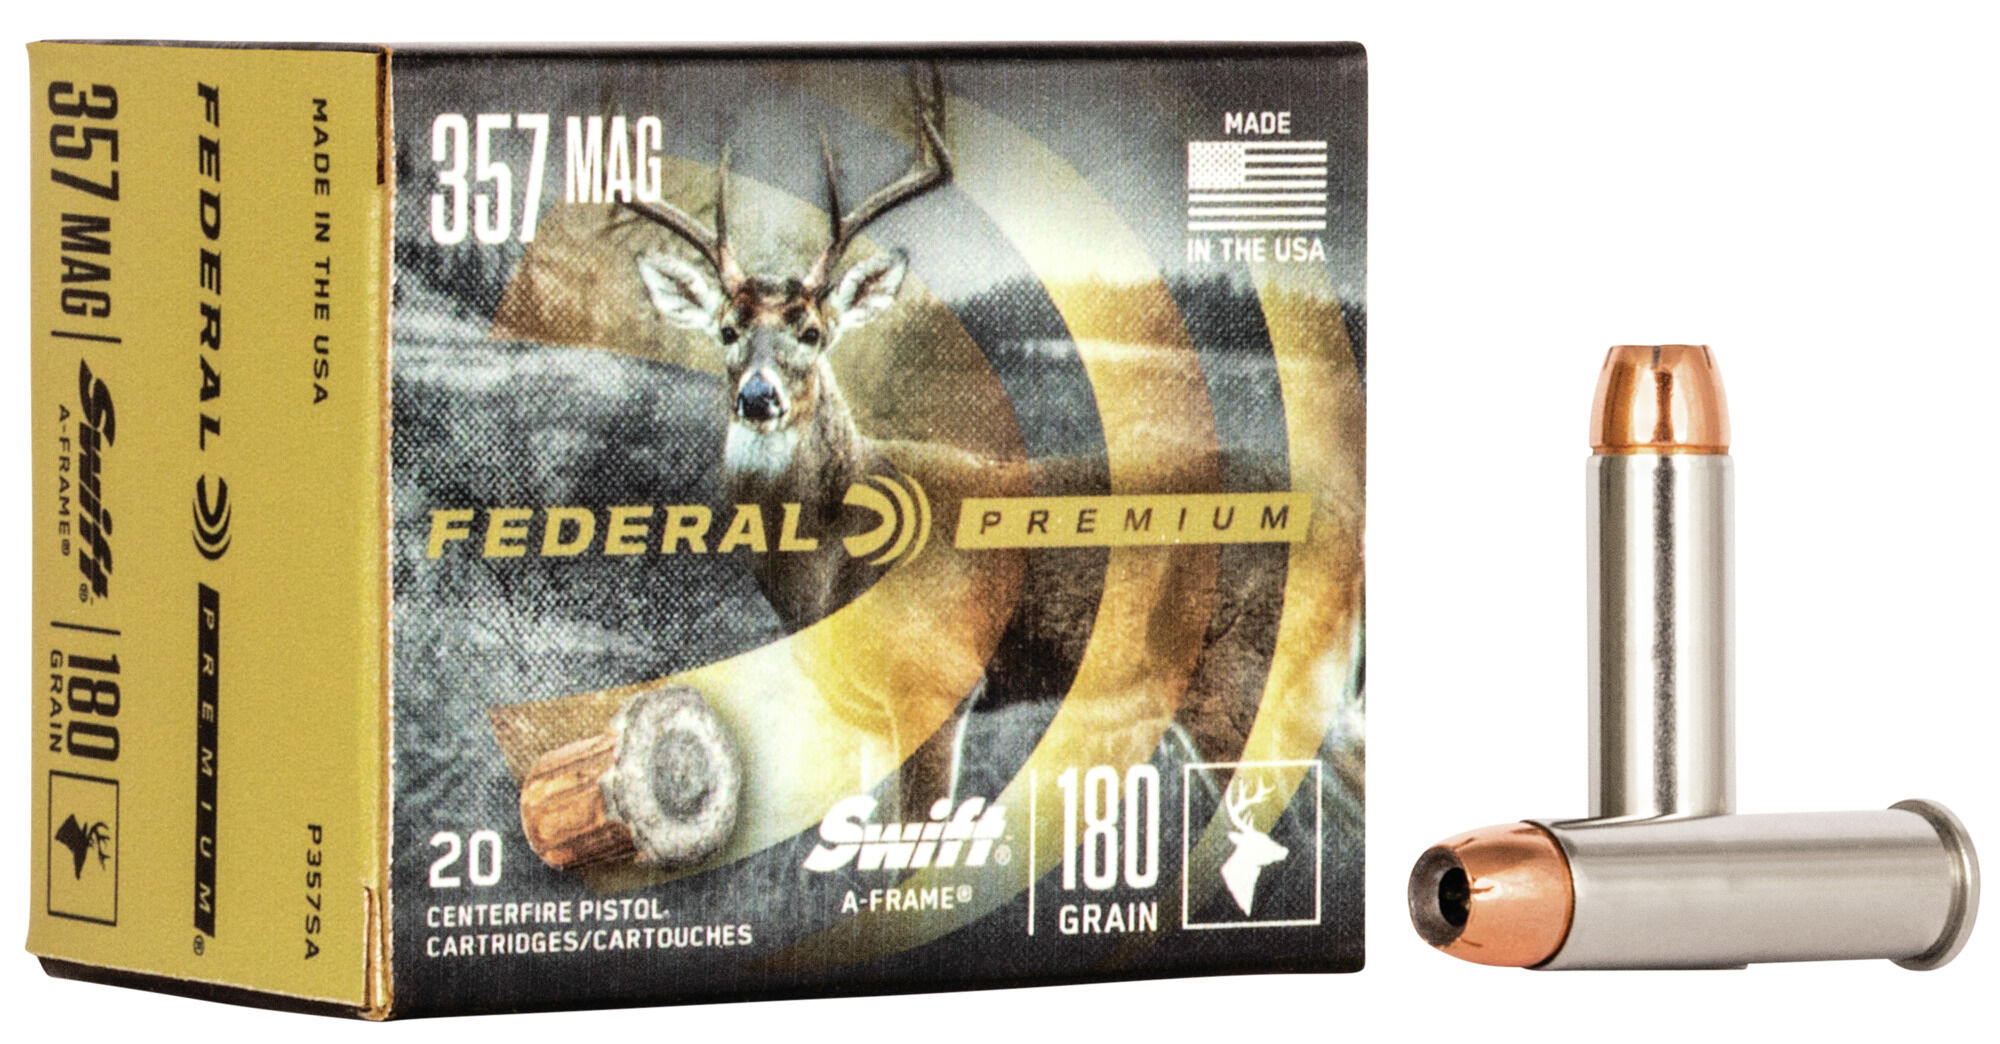 Federal Premium .357 Magnum 180 Grain Swift A-Frame Nickel-Plated Cased  Centerfire Pistol Ammunition P357SA $3.00 Off